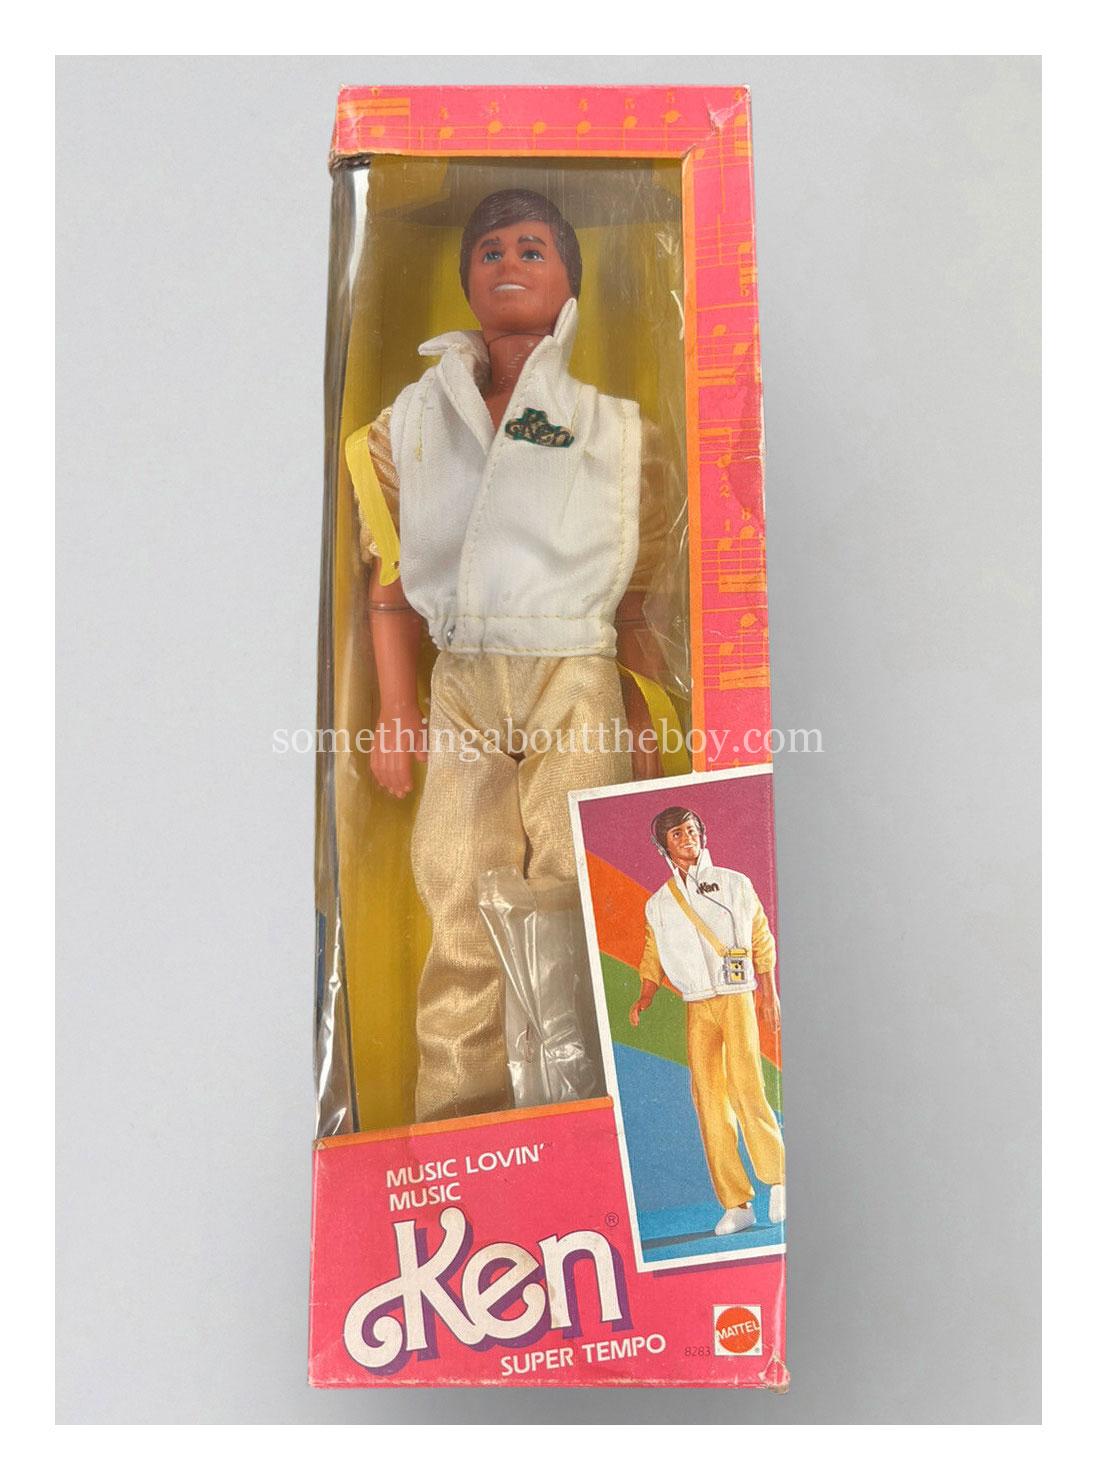 1986 #8283 Ken Super Tempo in original packaging